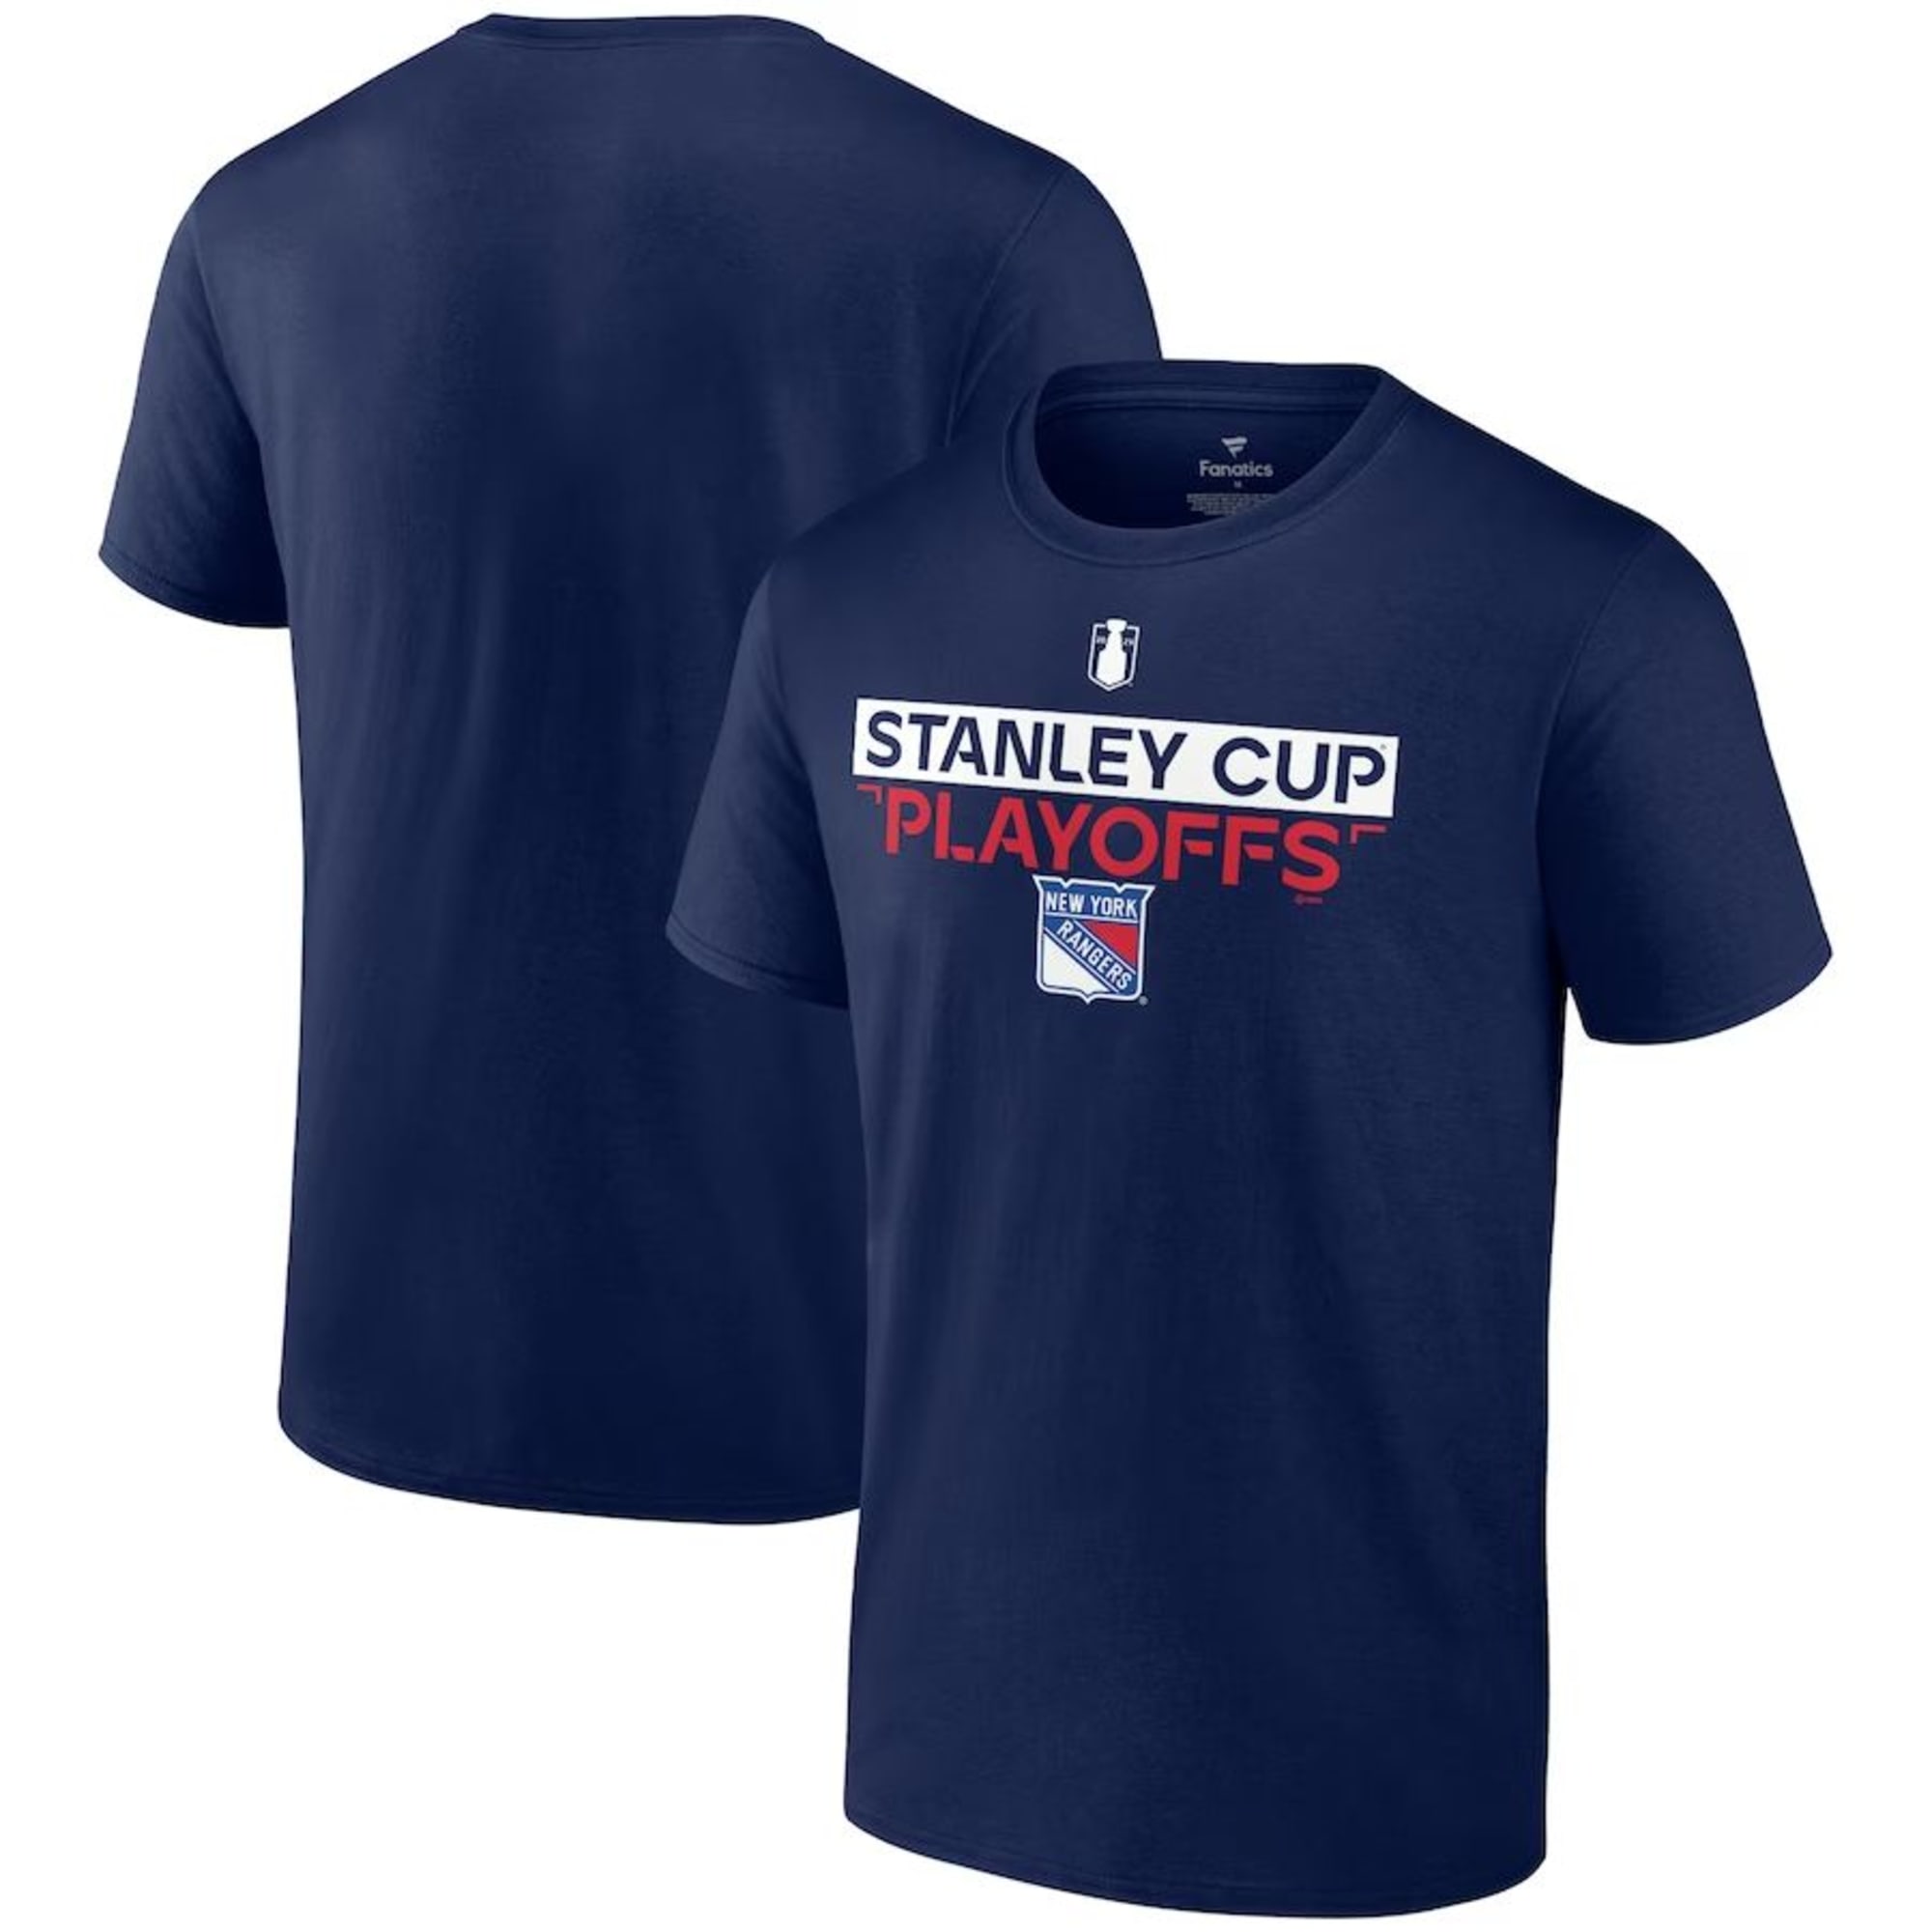 Patrick Kane New York Rangers Jerseys, Patrick Kane Rangers T-Shirts, Gear